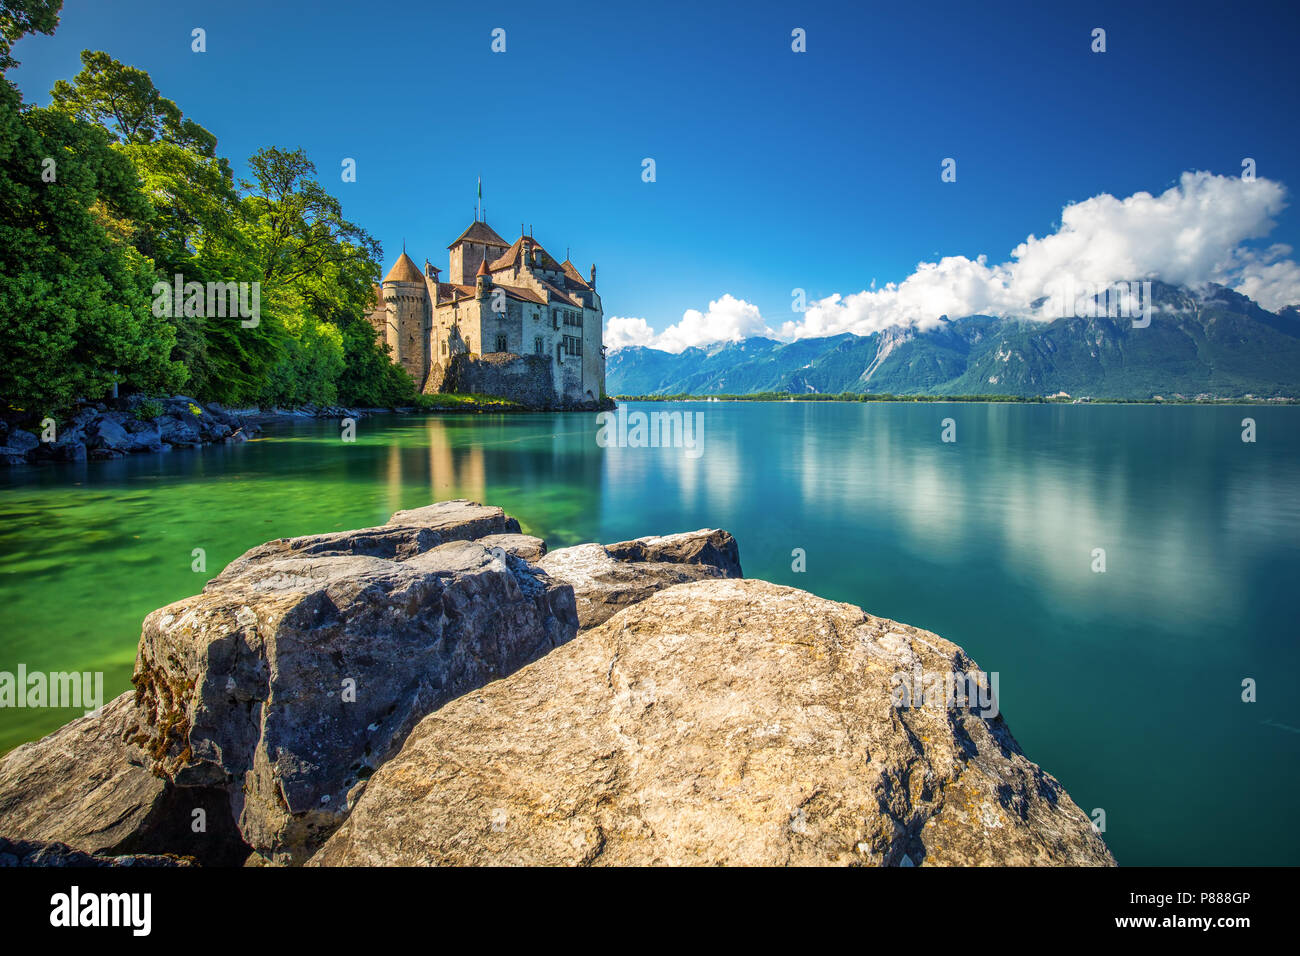 VEYTAUX, SWITZERLAND - June1, 2018 - Famous Chateau de Chillon at Lake Geneva near montreux, Switzerland, Europe. Stock Photo